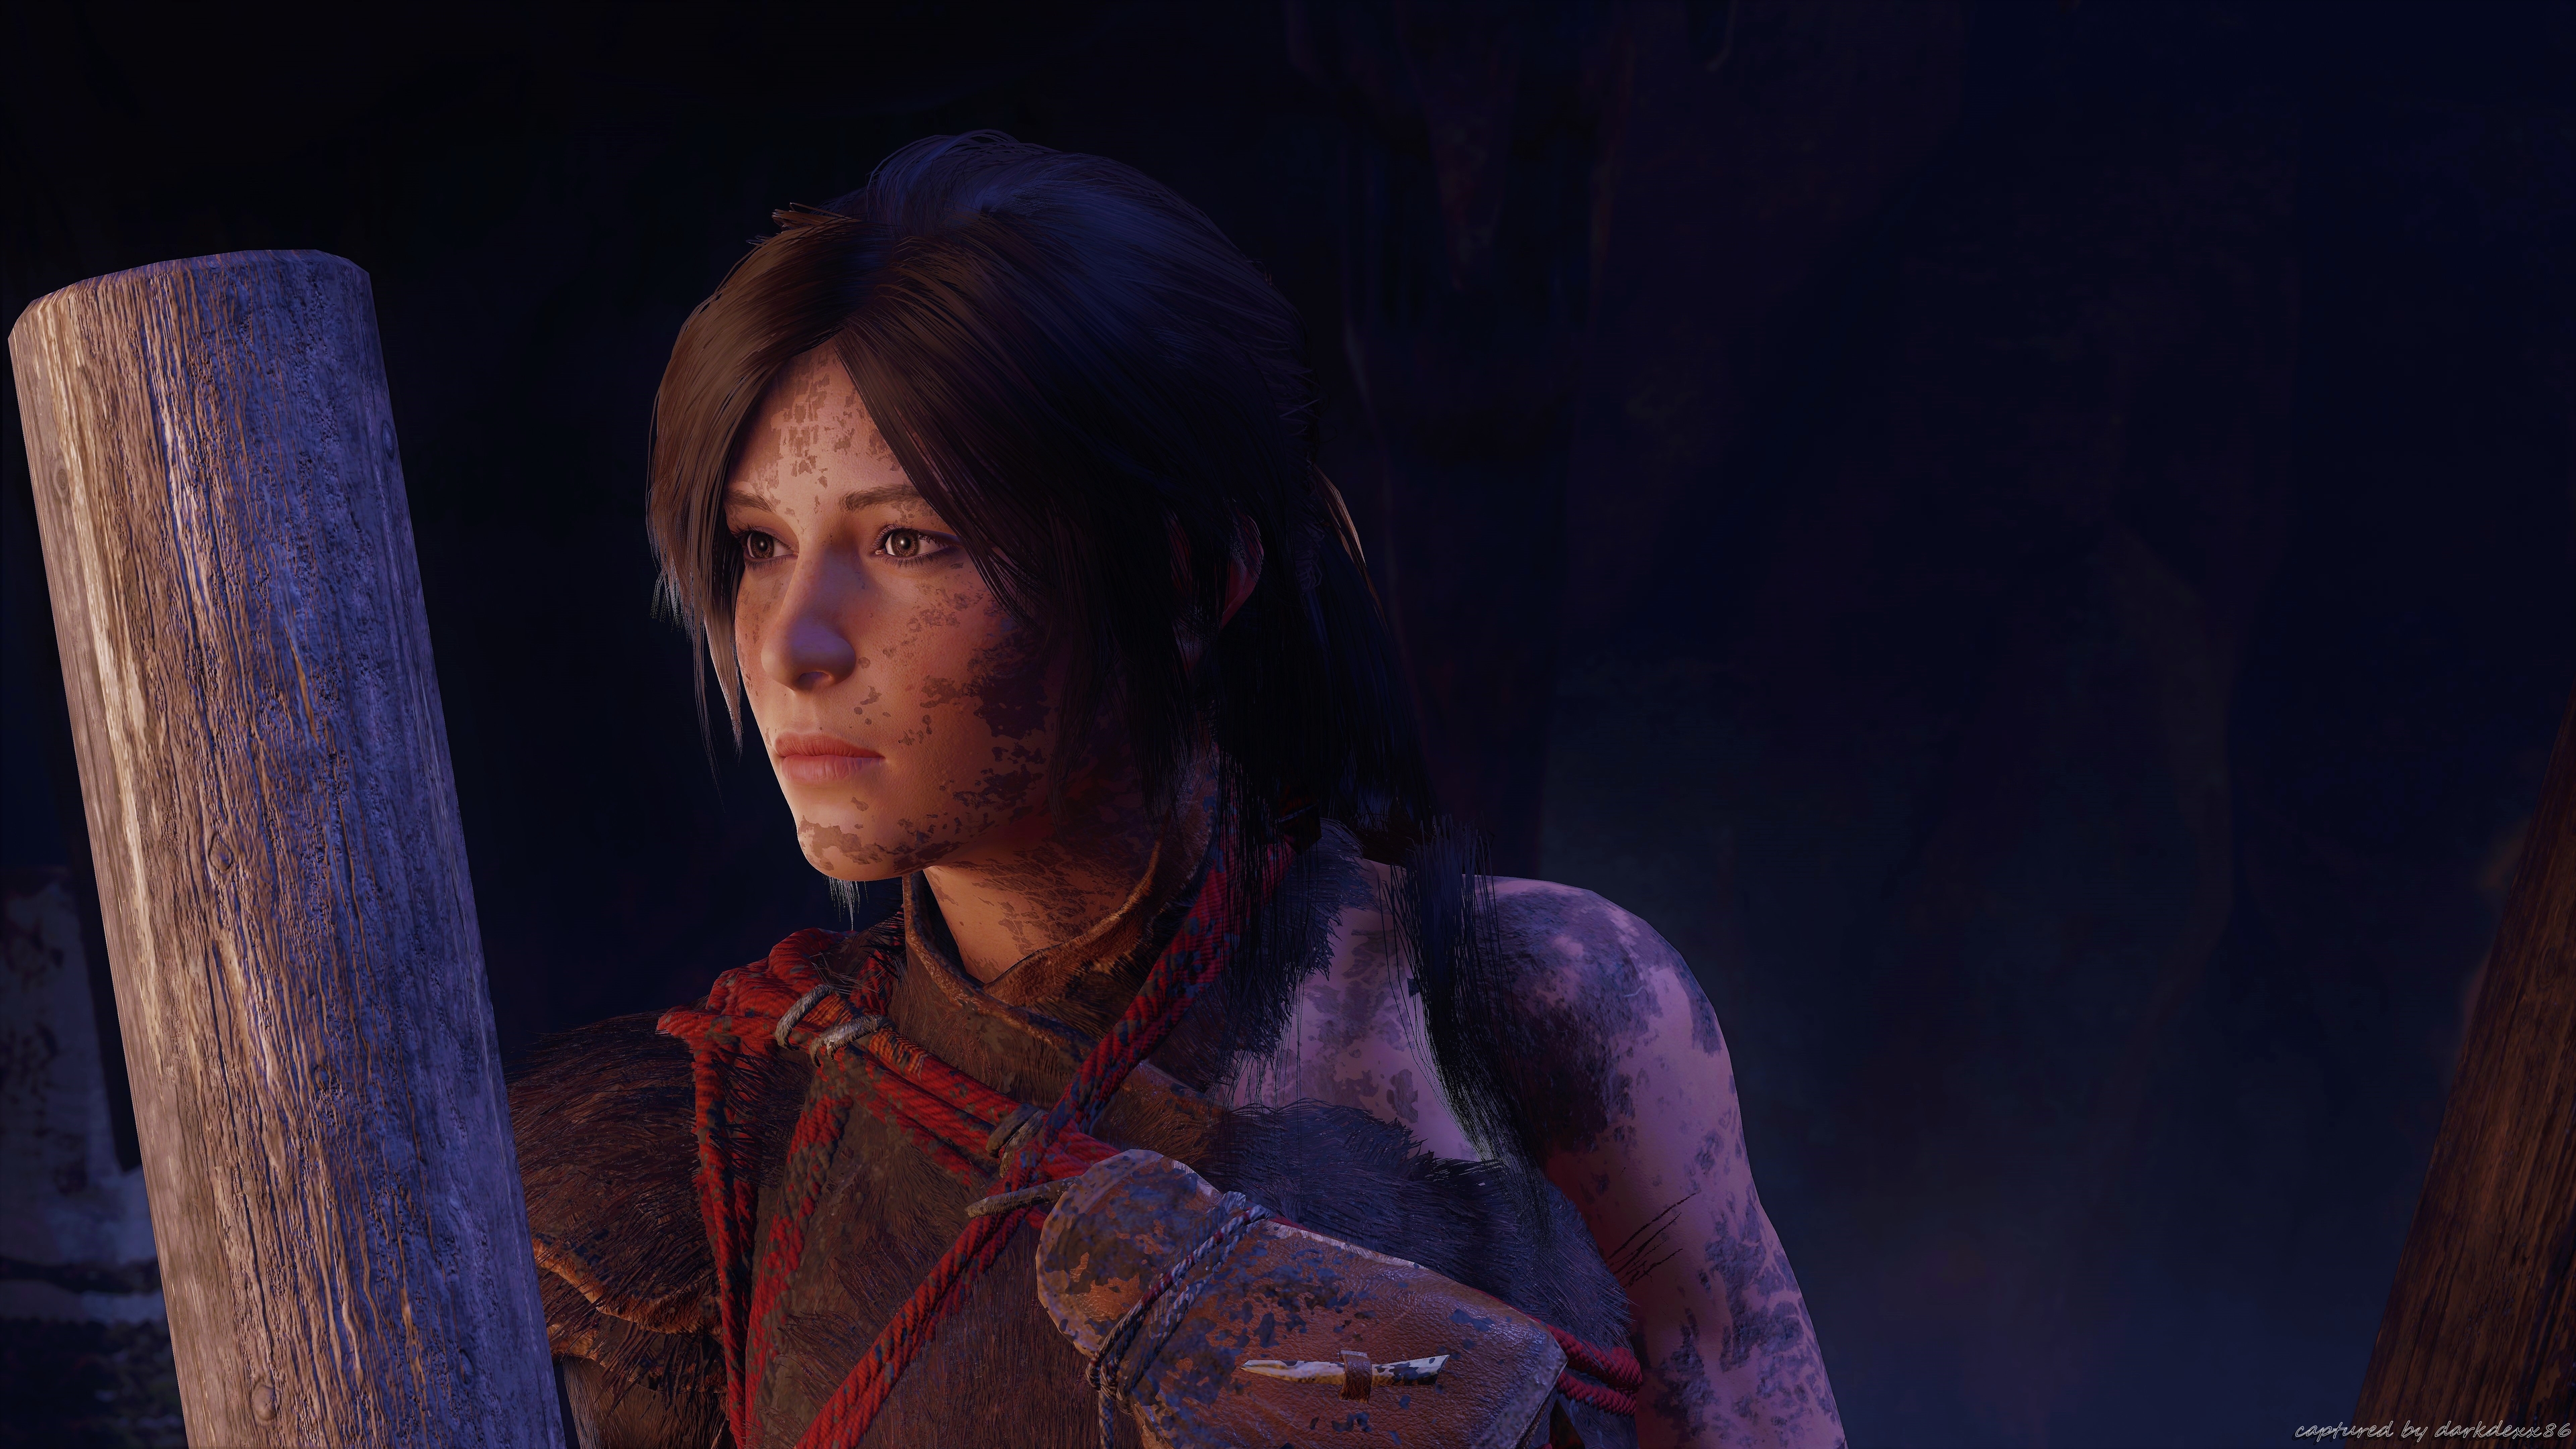 Wallpaper 4k Lara Croft Shadow Of The Tomb Raider 2019 4k 2019 Games